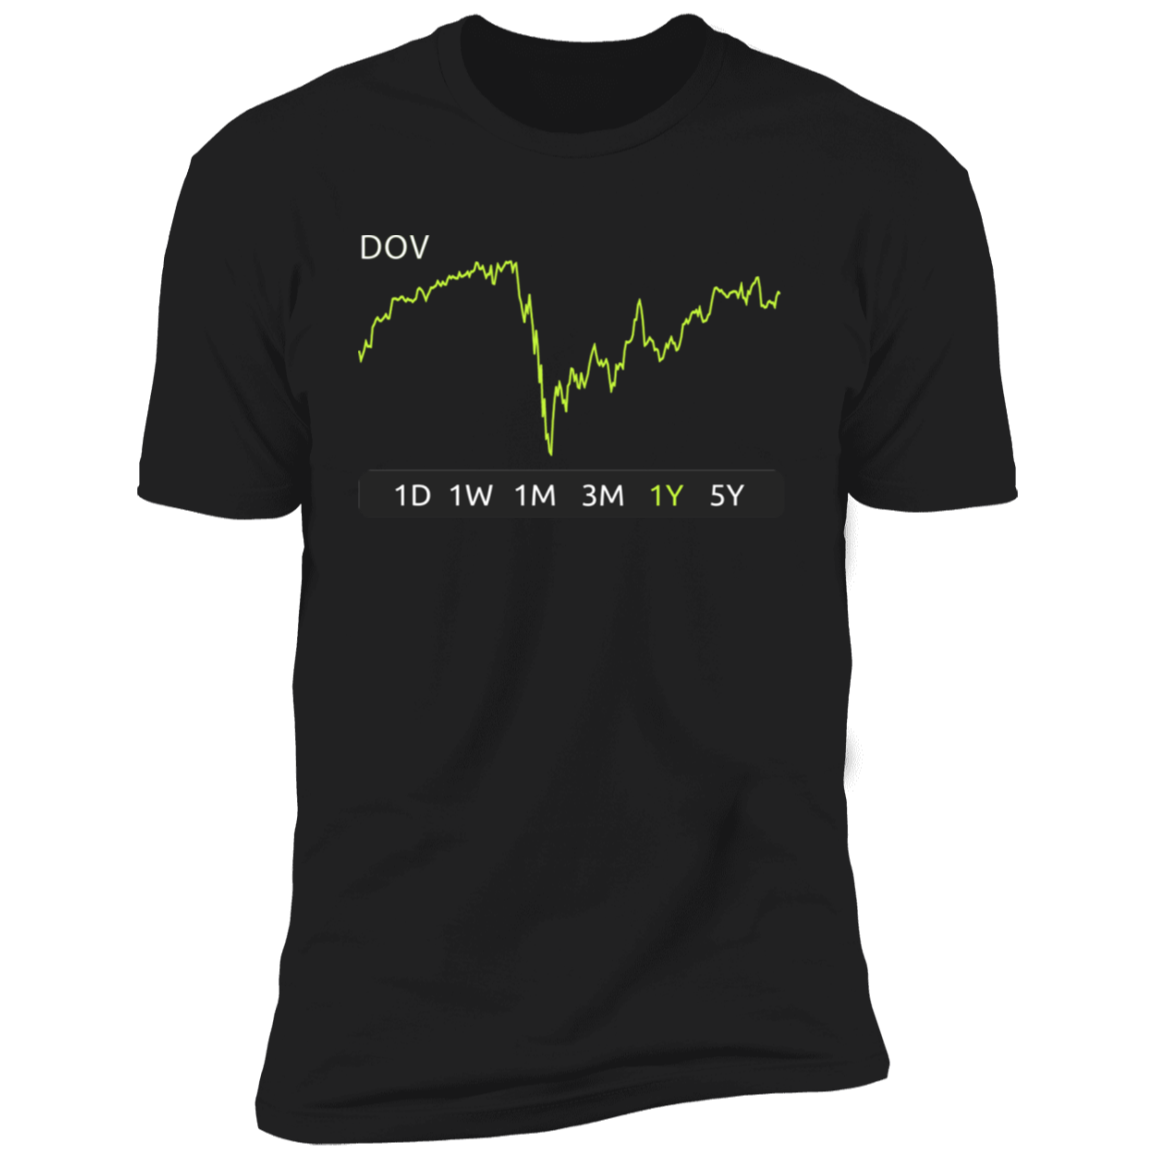 DOV Stock 1y Premium T-Shirt